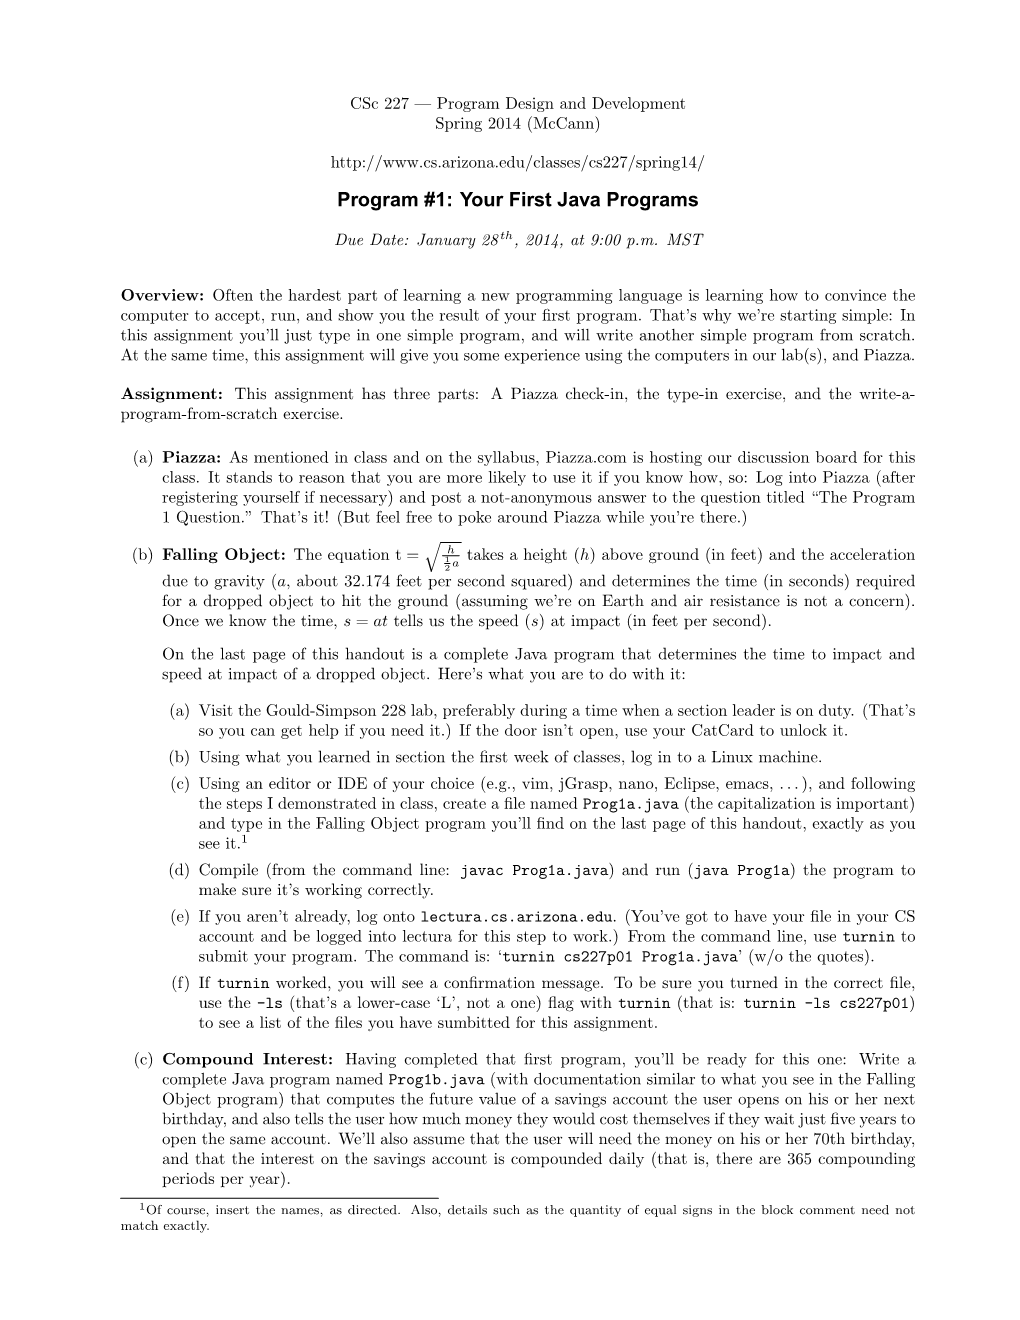 Program #1: Your First Java Programs